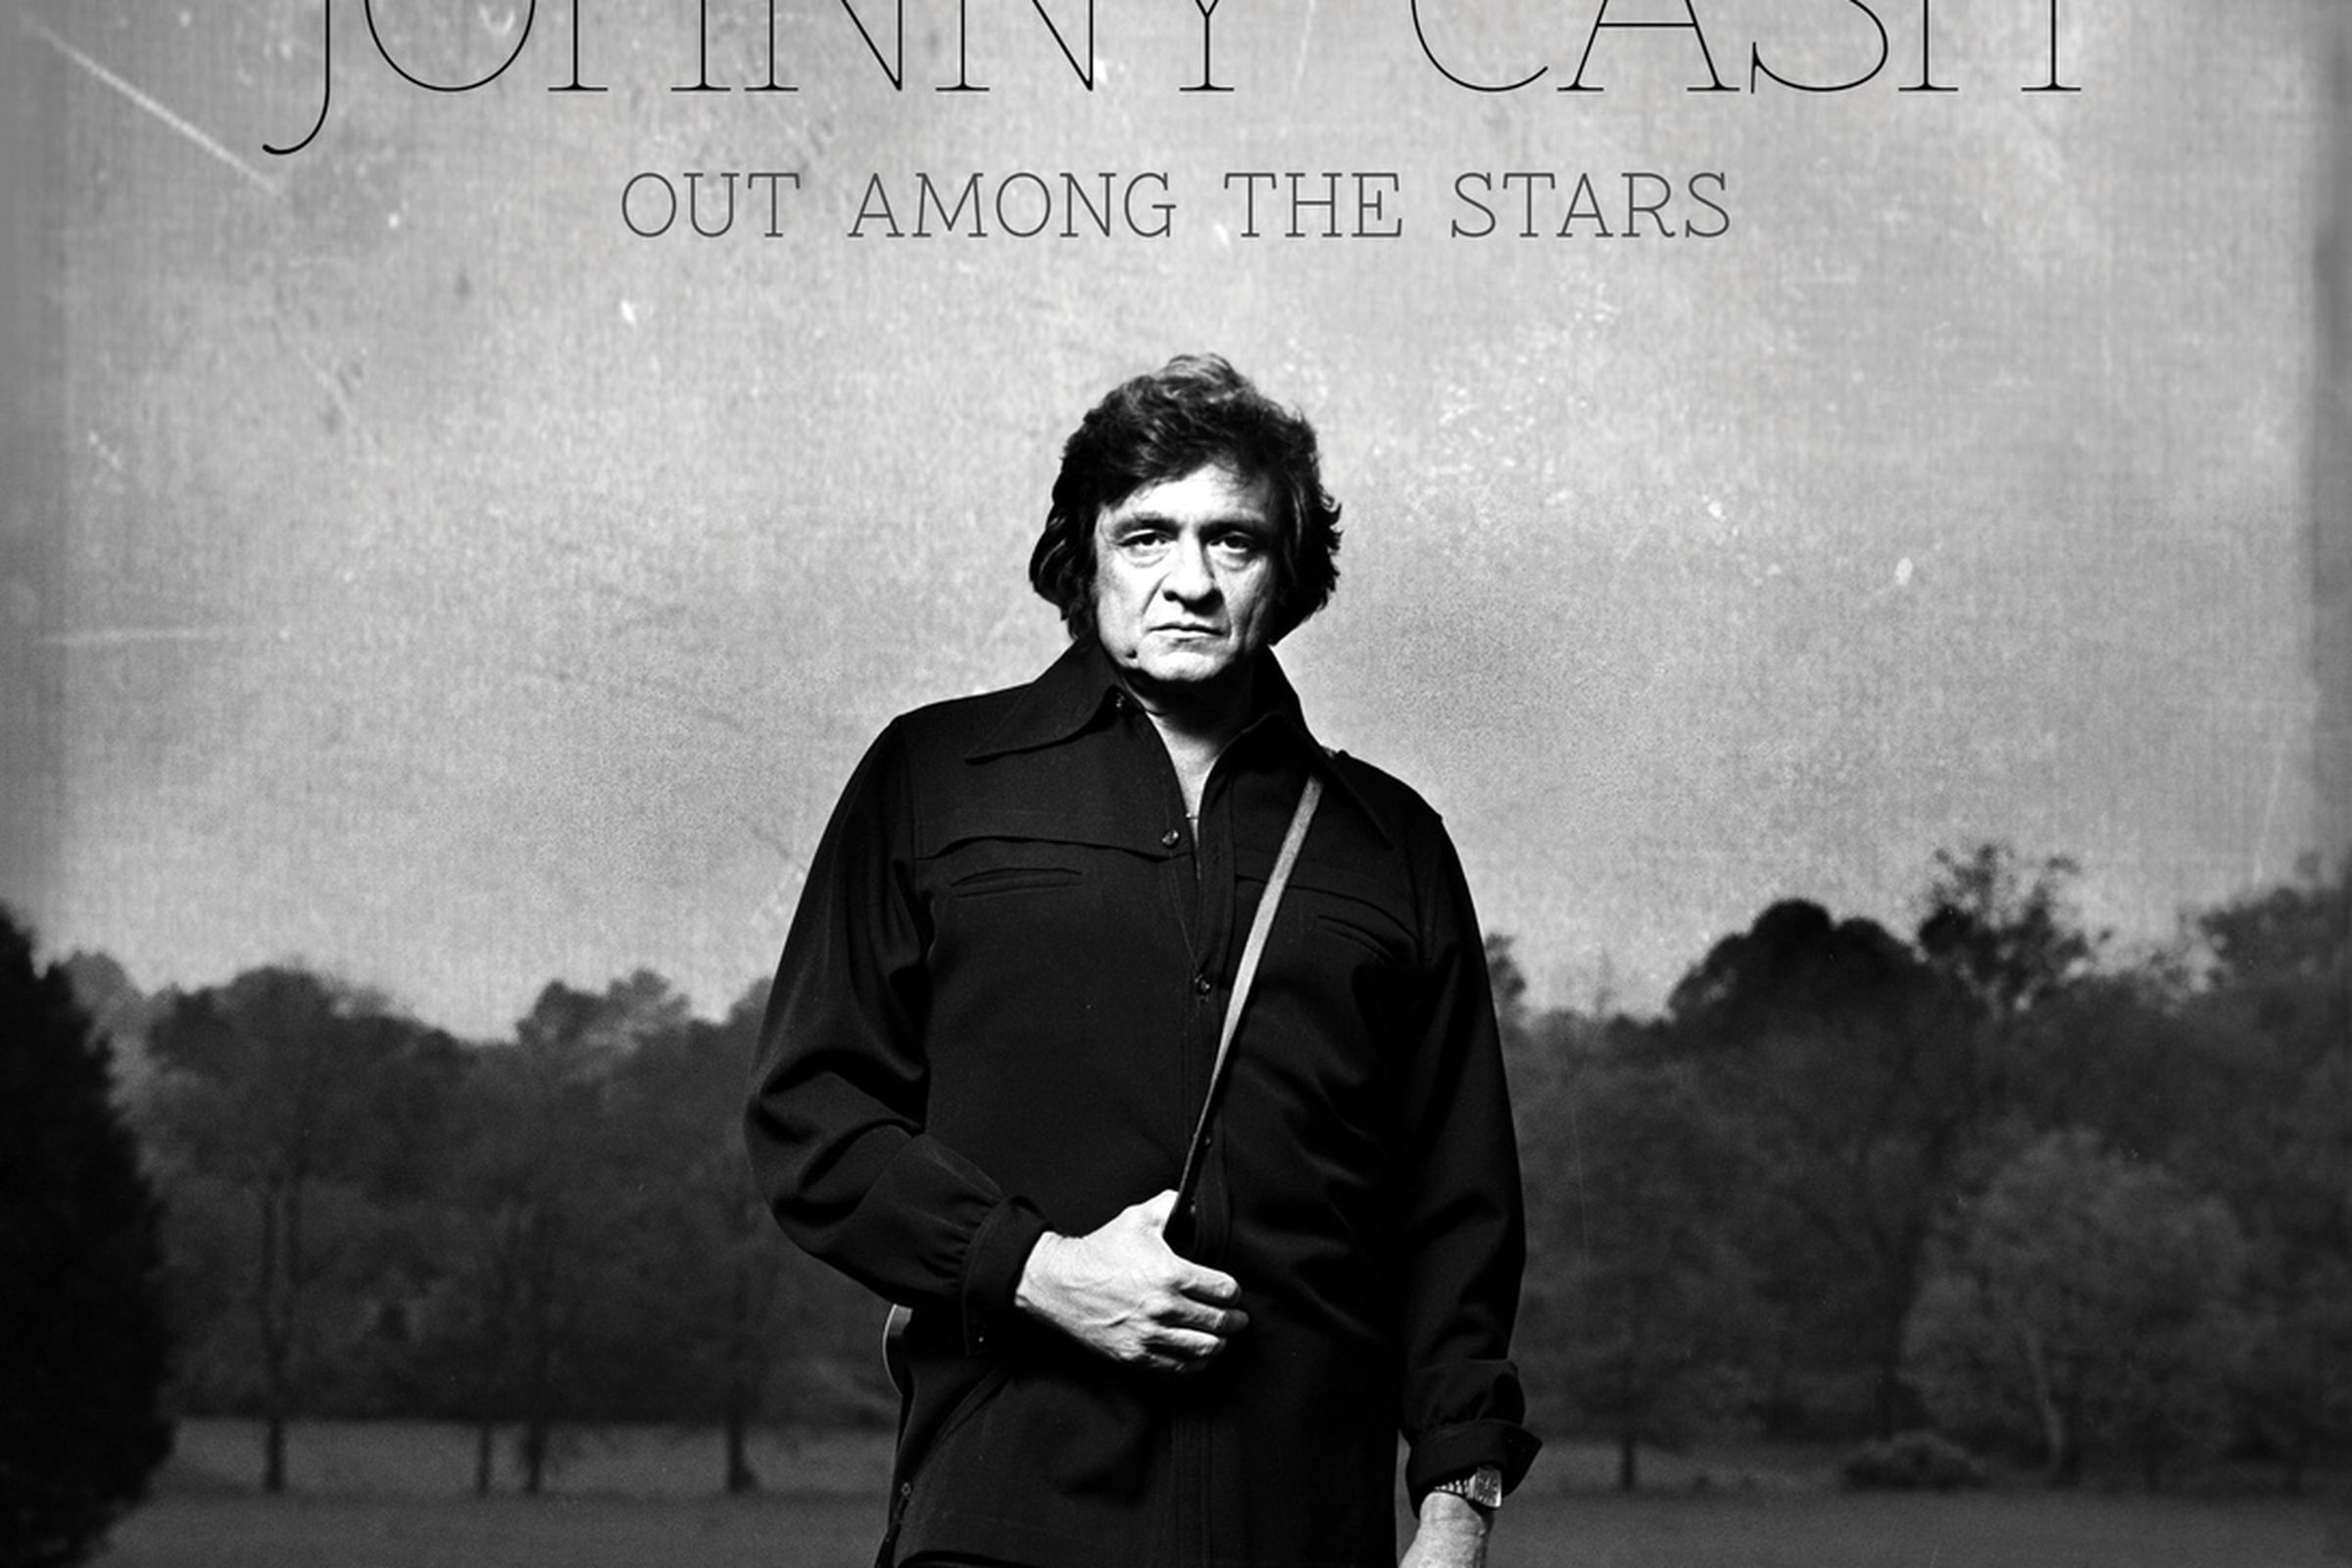 Johnny Cash Among the Stars